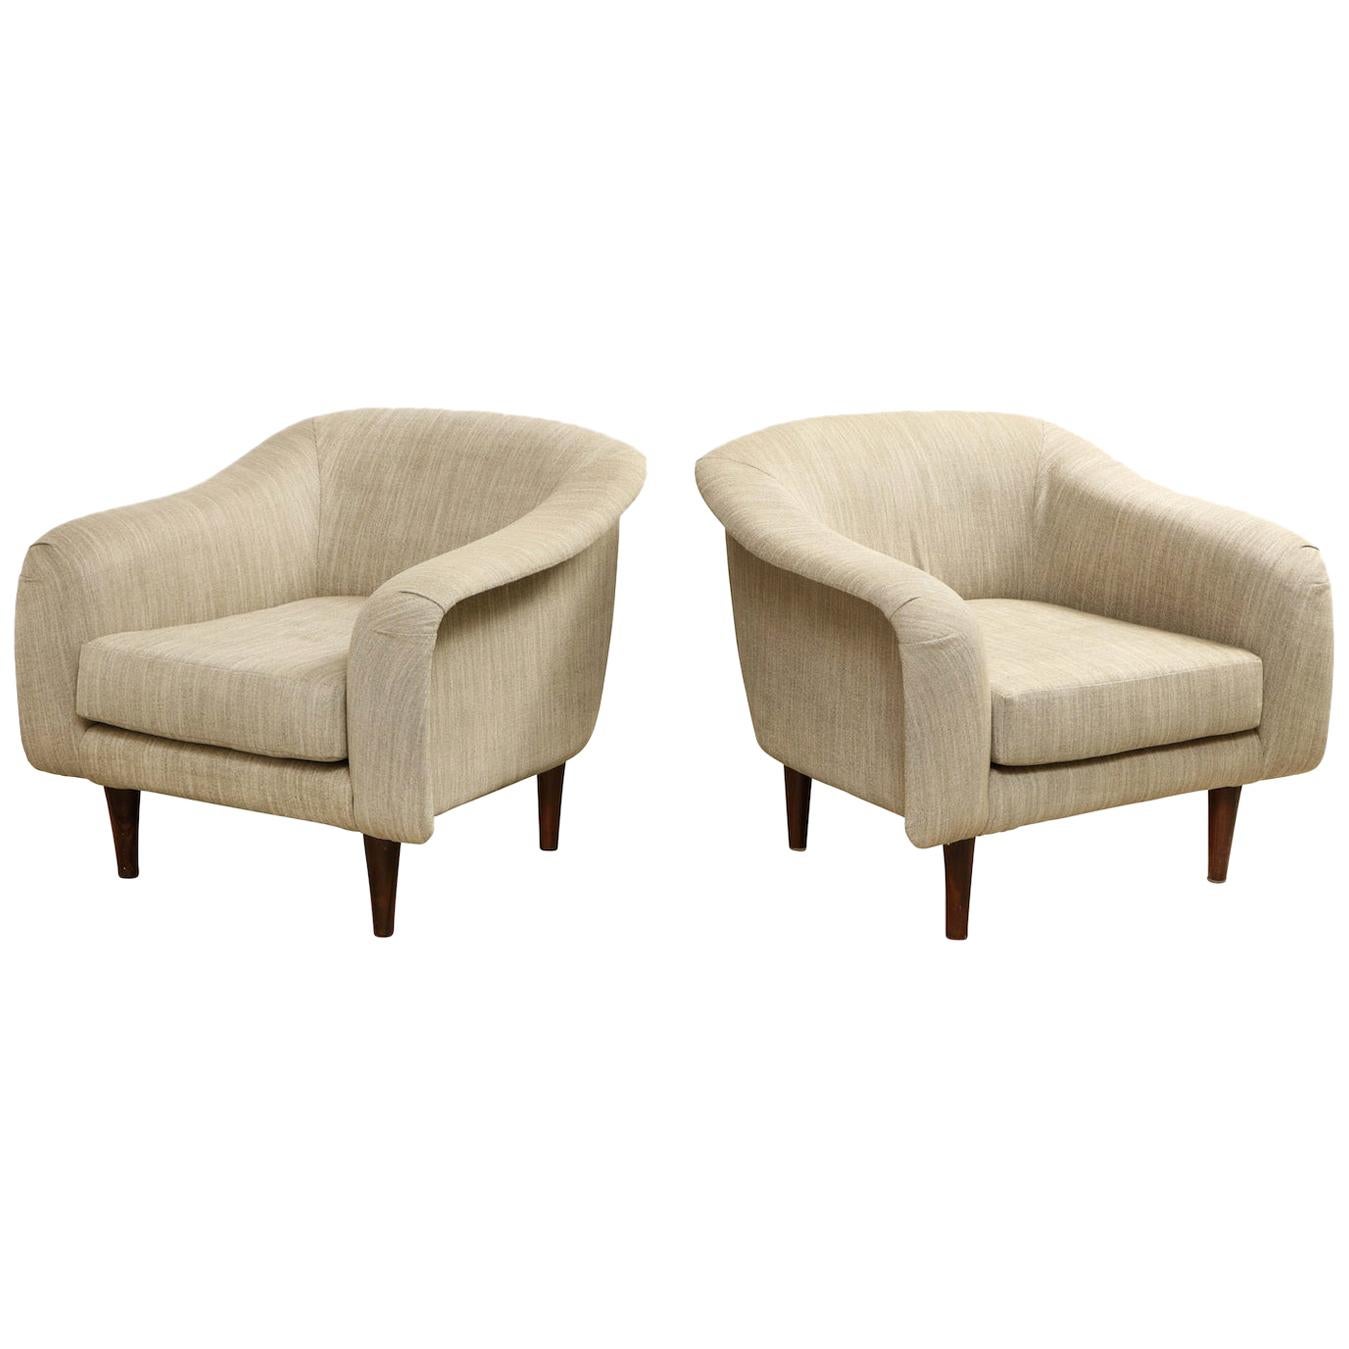 Joaquim Tenreiro Pair of "Curved" Lounge Chairs